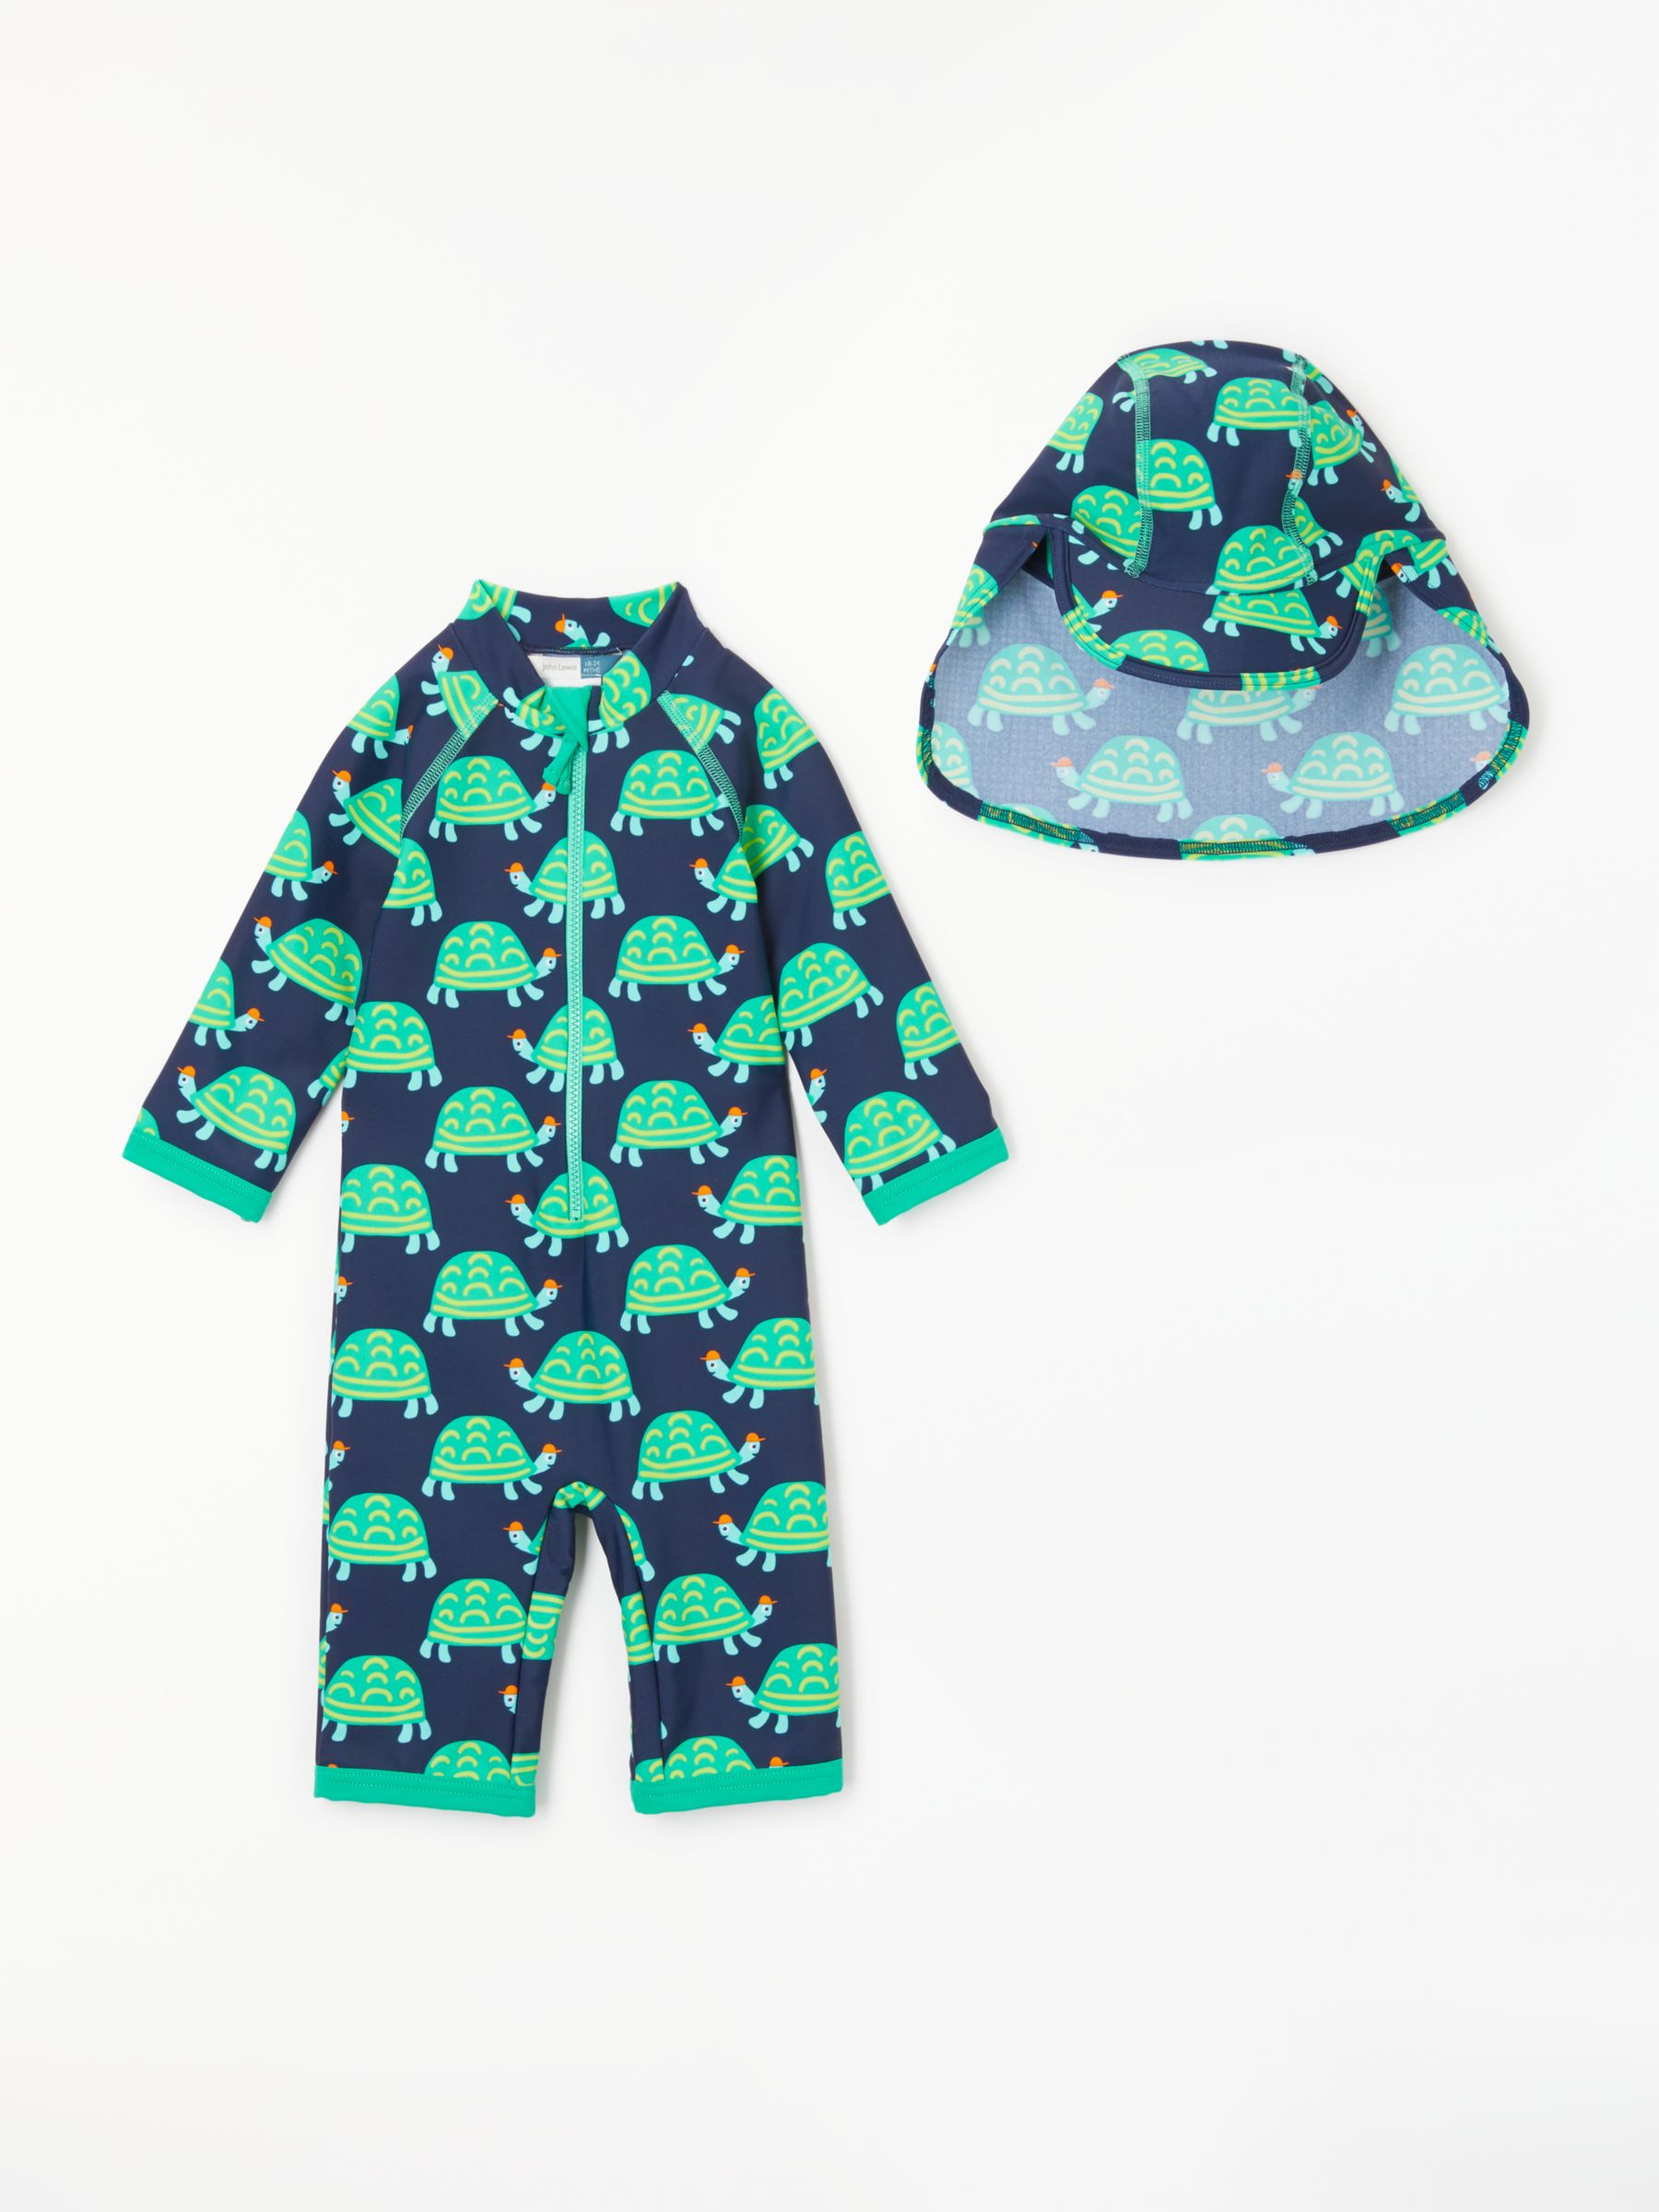 John Lewis & Partners Baby Tortoise UV SunPro Swimsuit and Hat, Navy/Green, 9-12 months